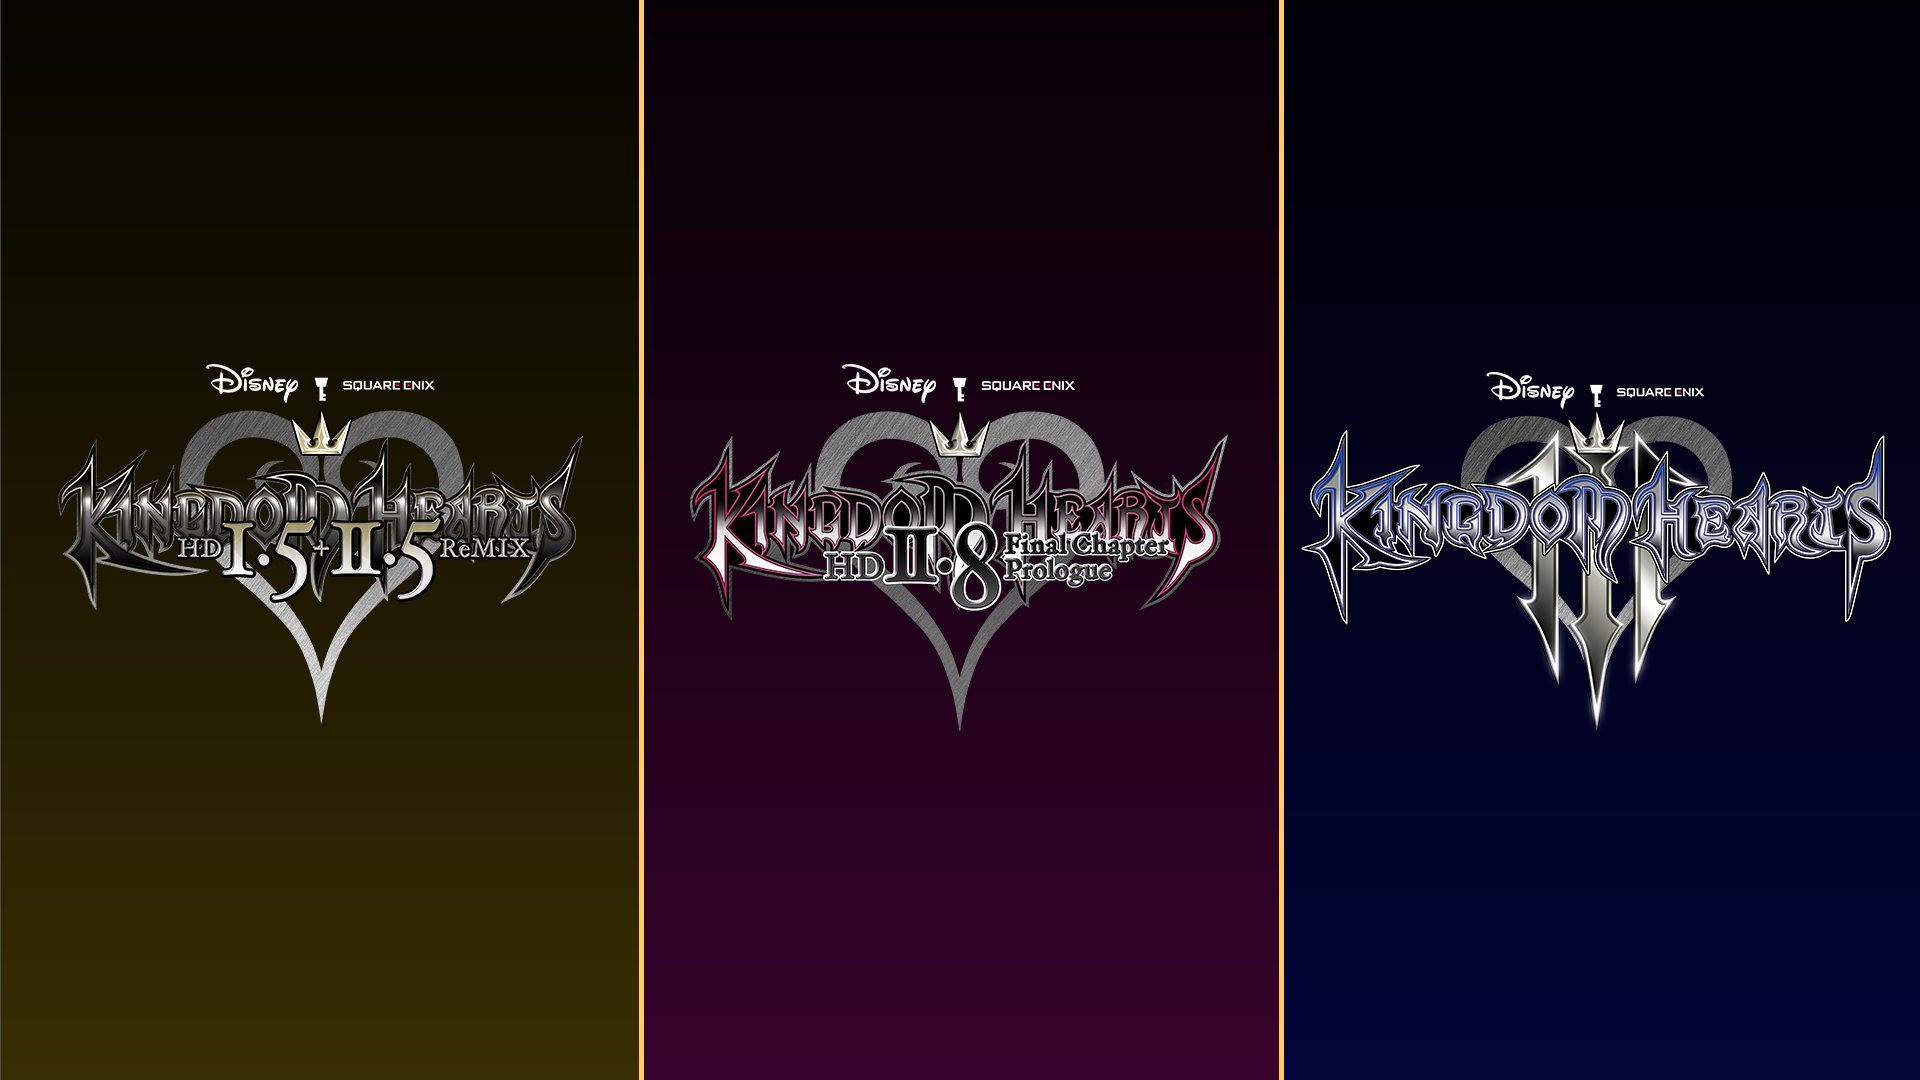 KINGDOM HEARTS III + Re Mind (DLC) Cloud Version for Nintendo